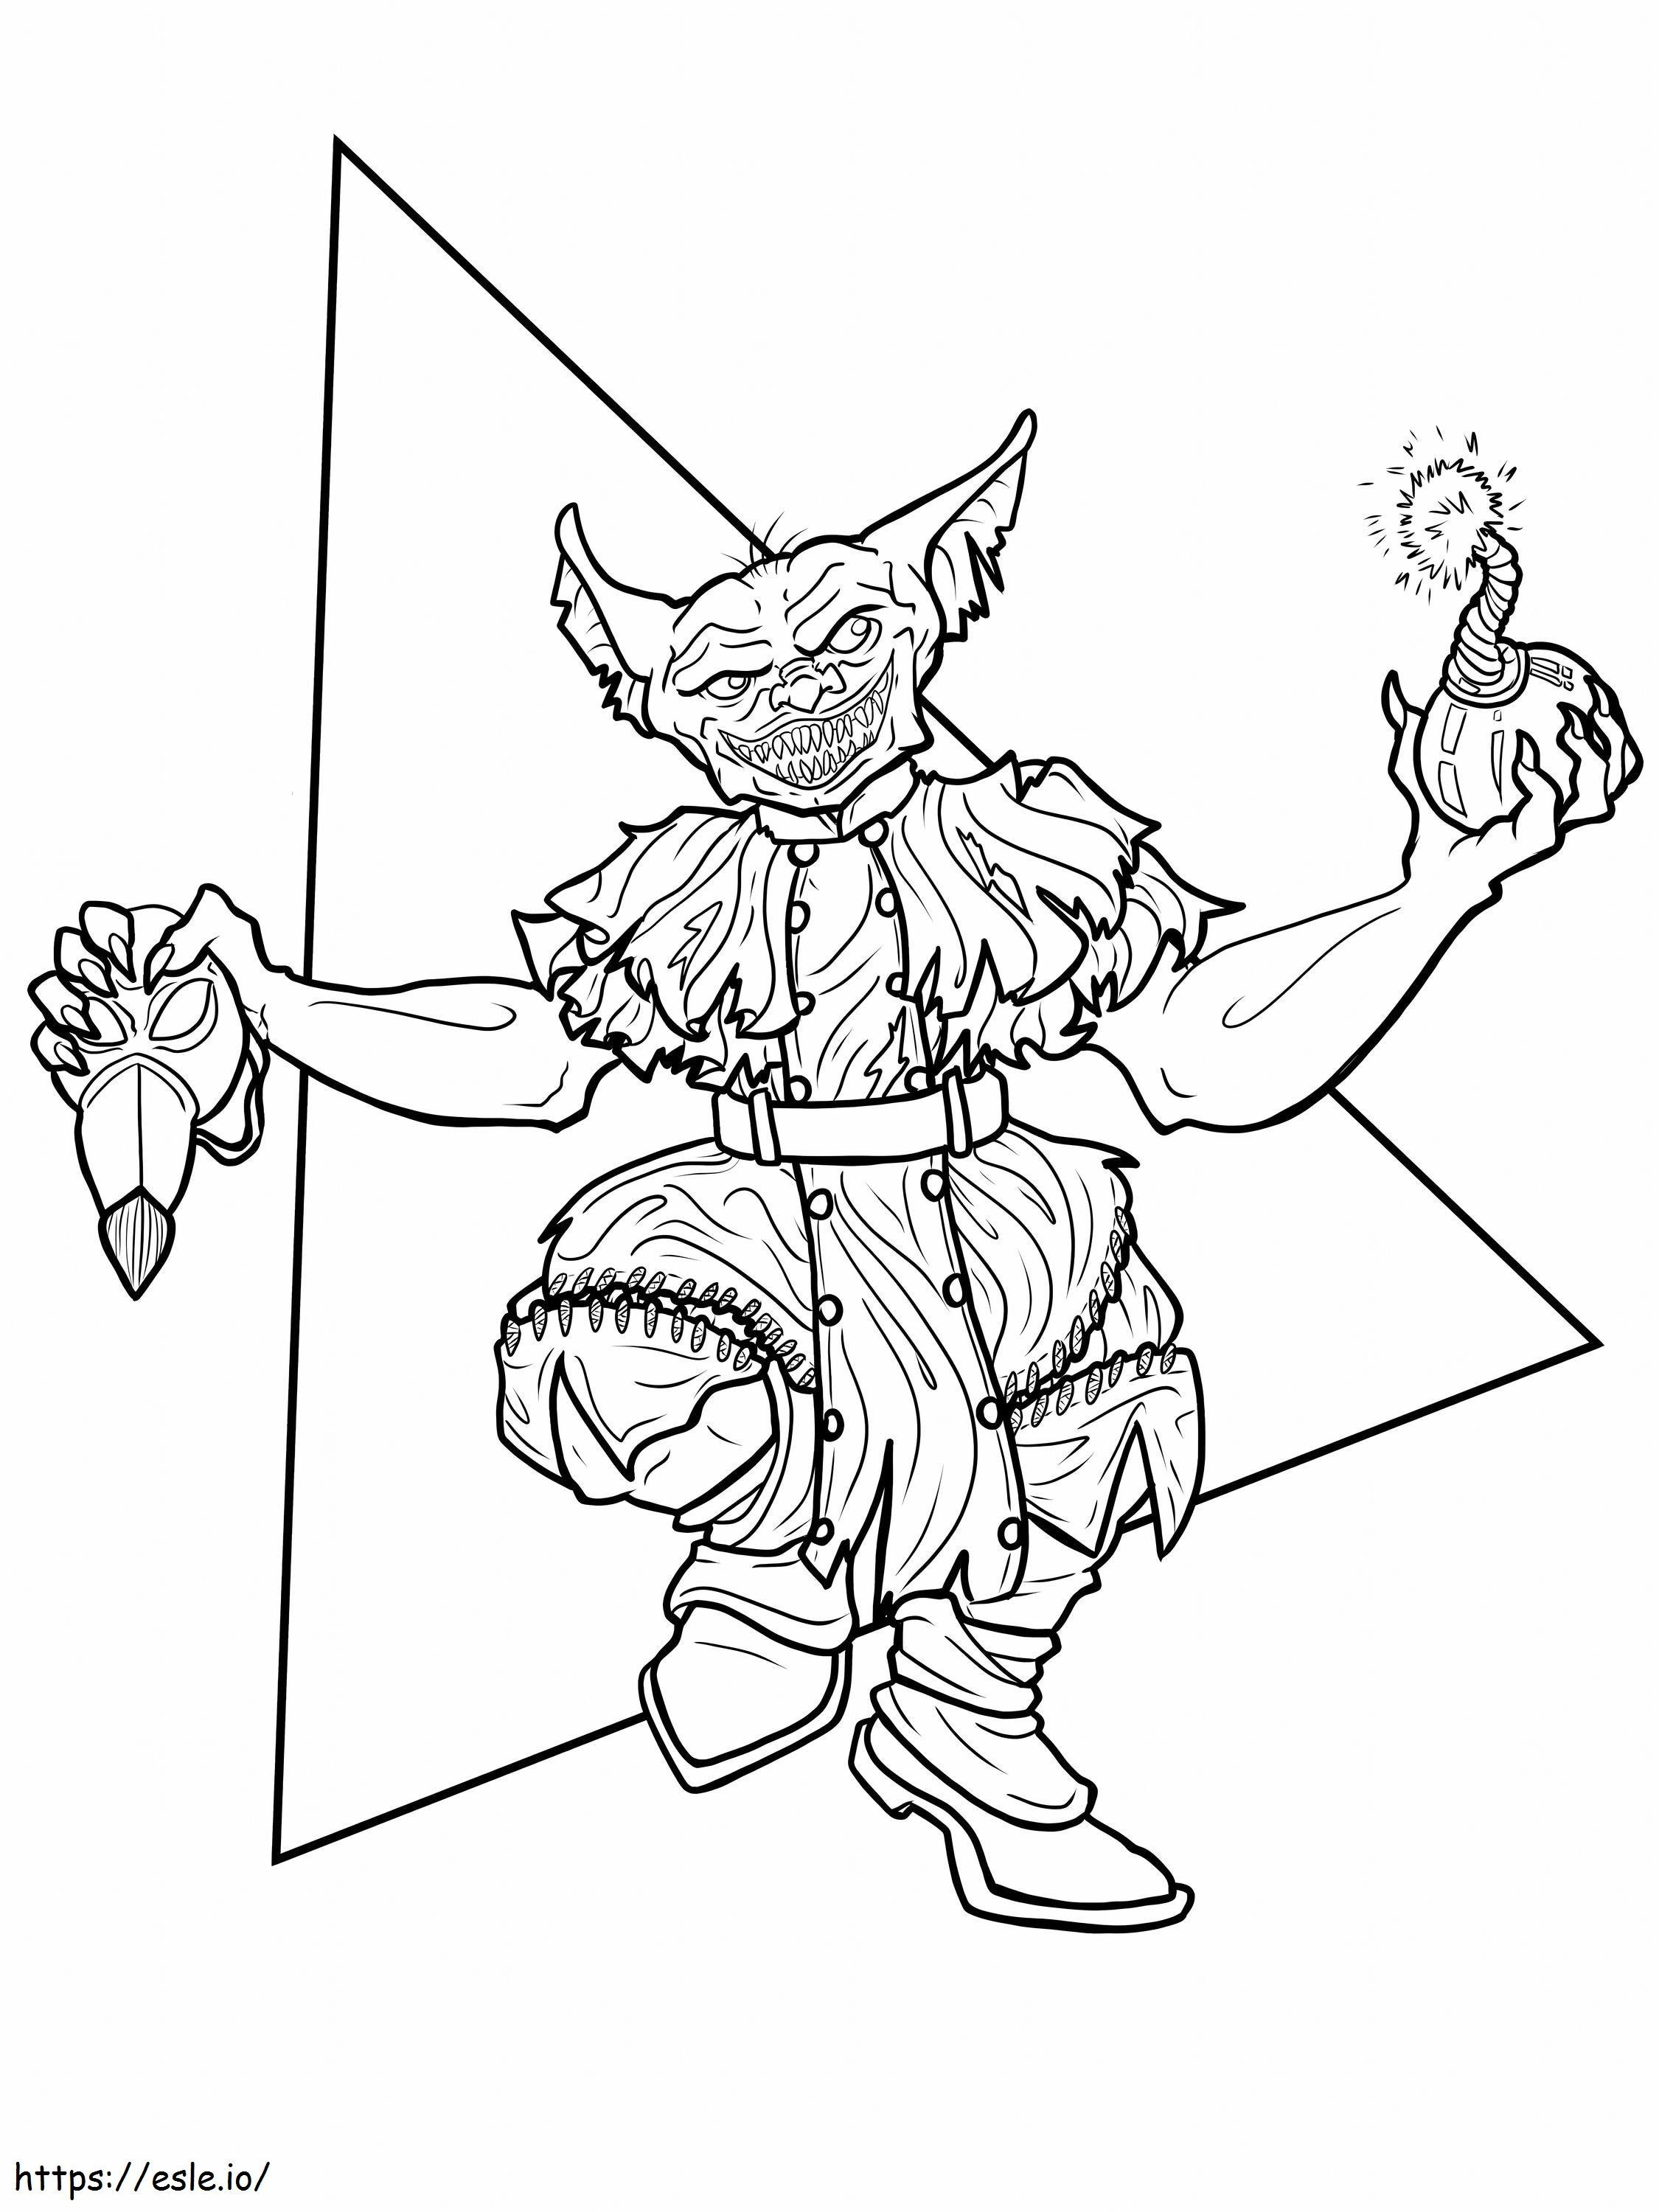 Goblin Clown coloring page